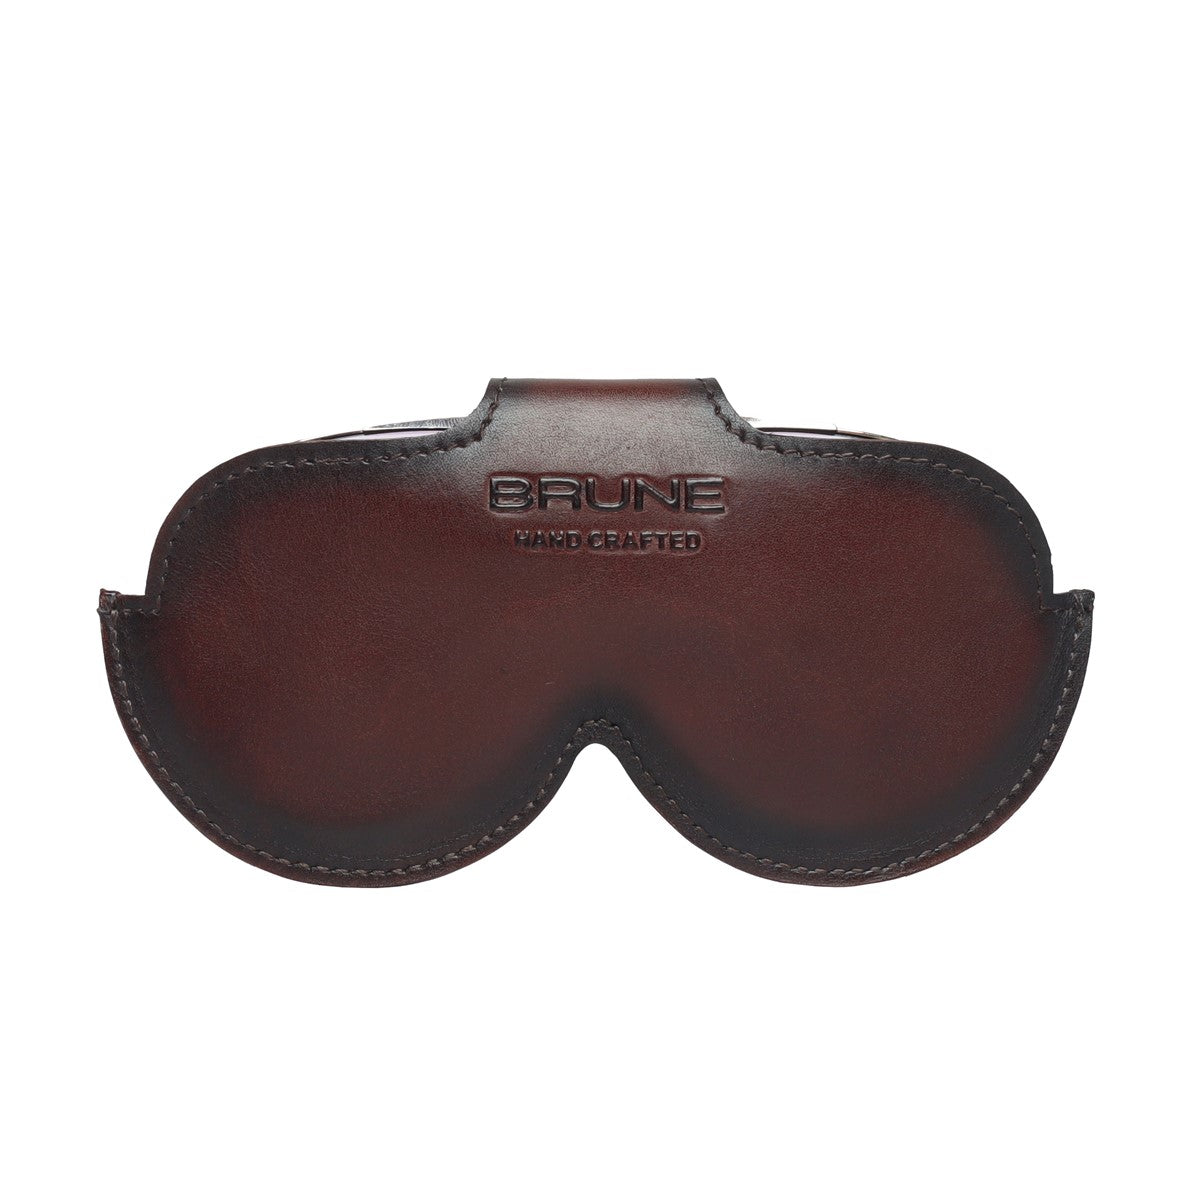 Brown Leather Elegant Look With Metal Lion Eyewear Glasses Cover by BRUNE